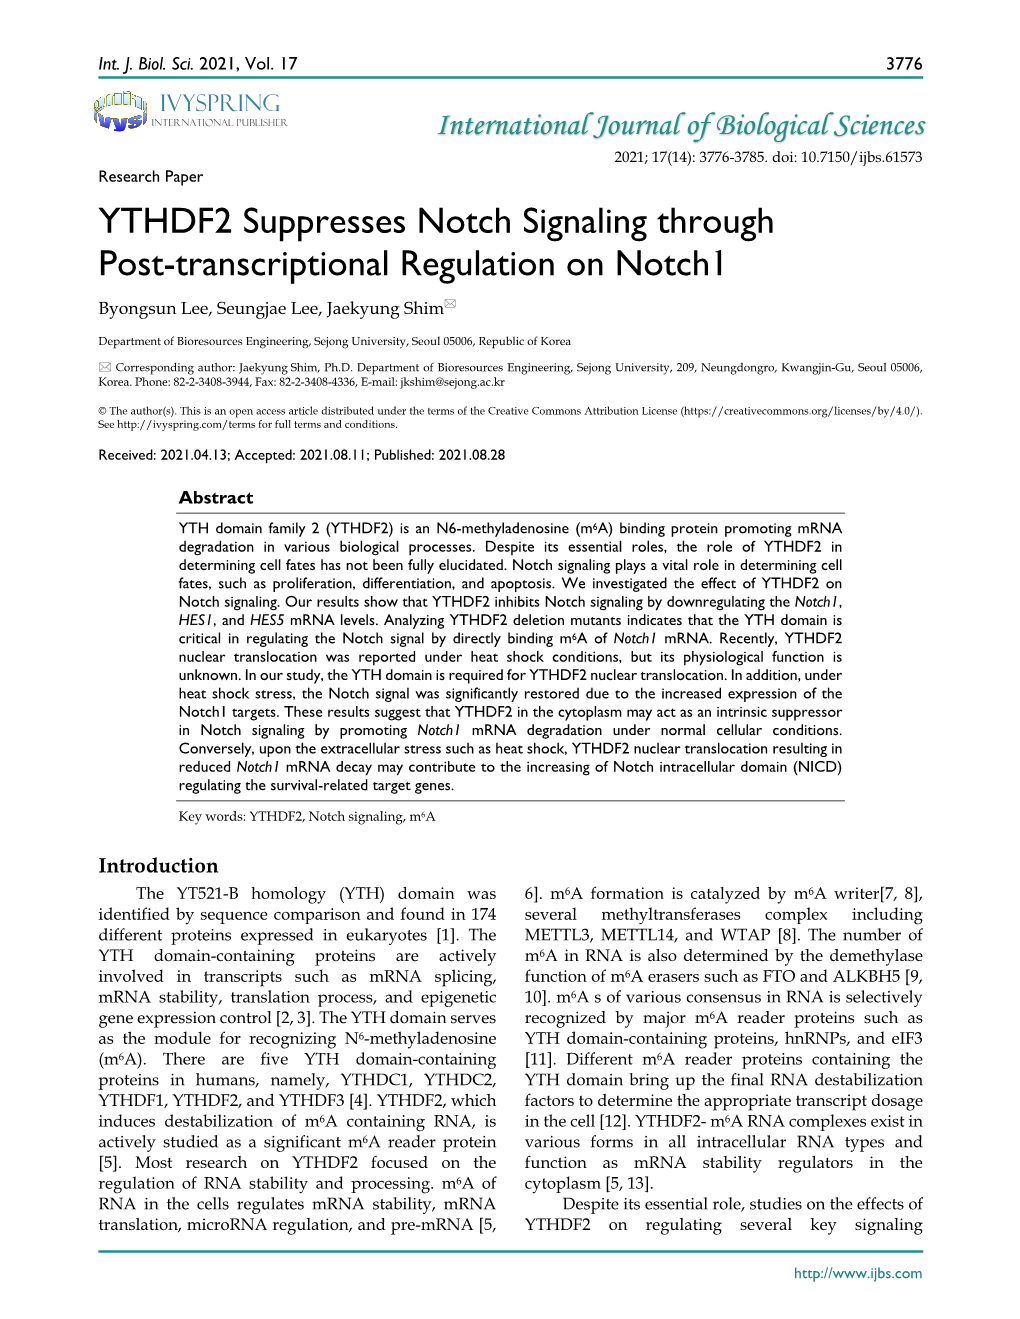 YTHDF2 Suppresses Notch Signaling Through Post-Transcriptional Regulation on Notch1 Byongsun Lee, Seungjae Lee, Jaekyung Shim